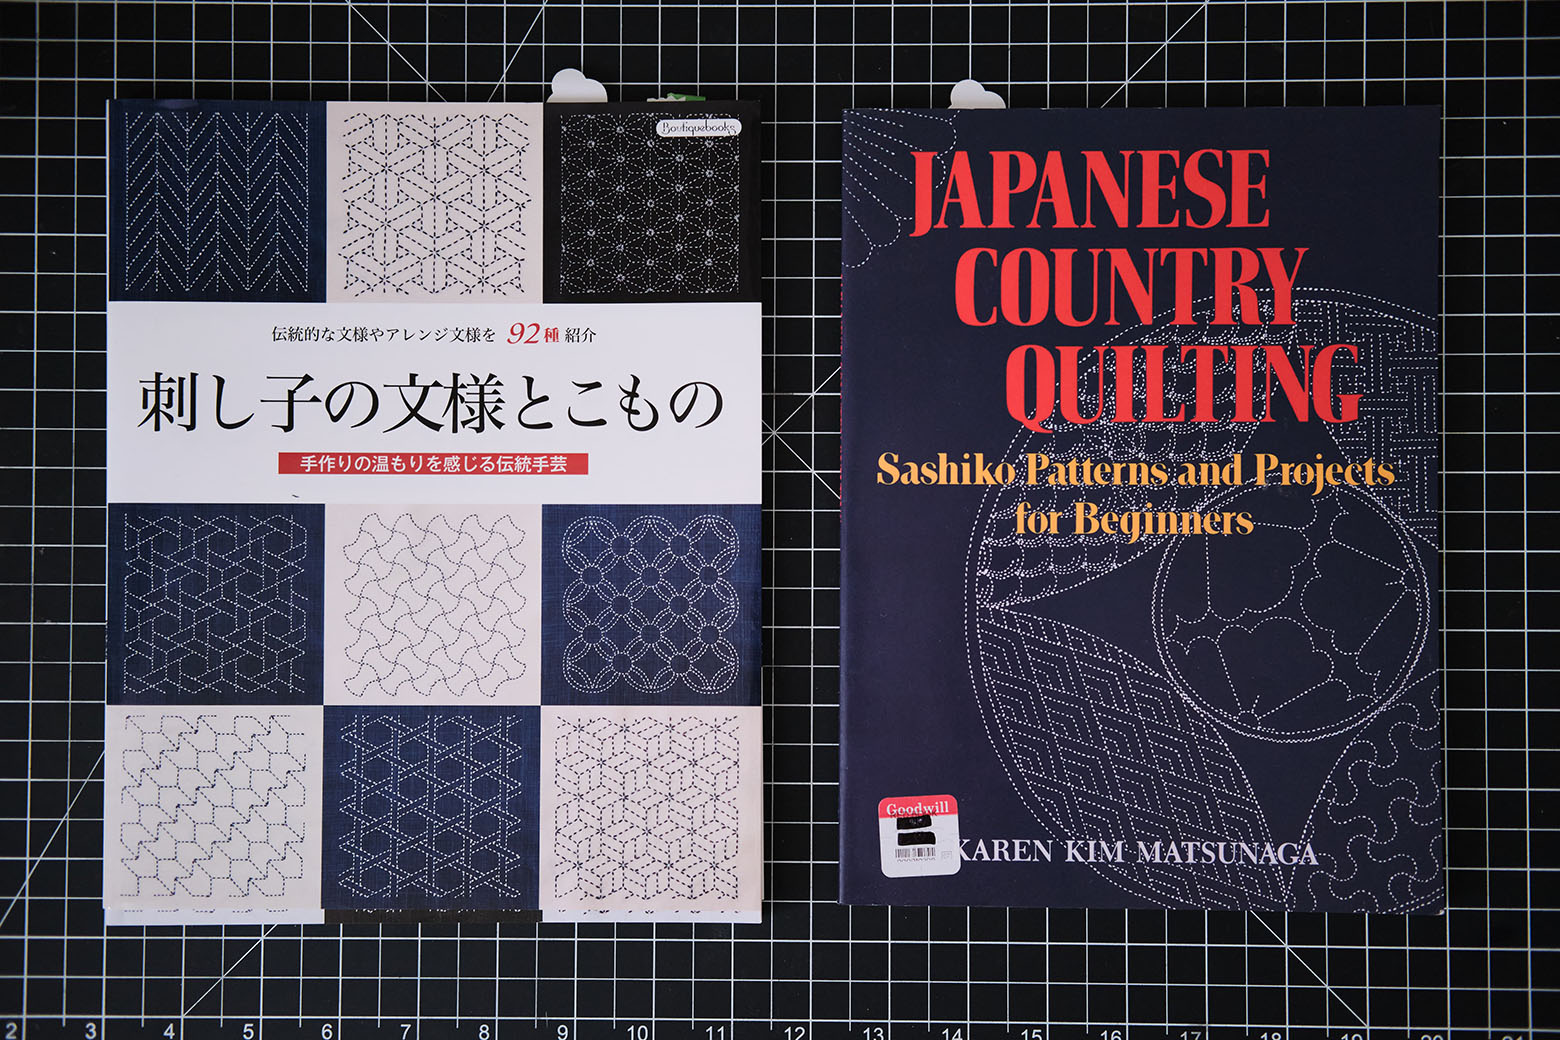 book on Sashiko